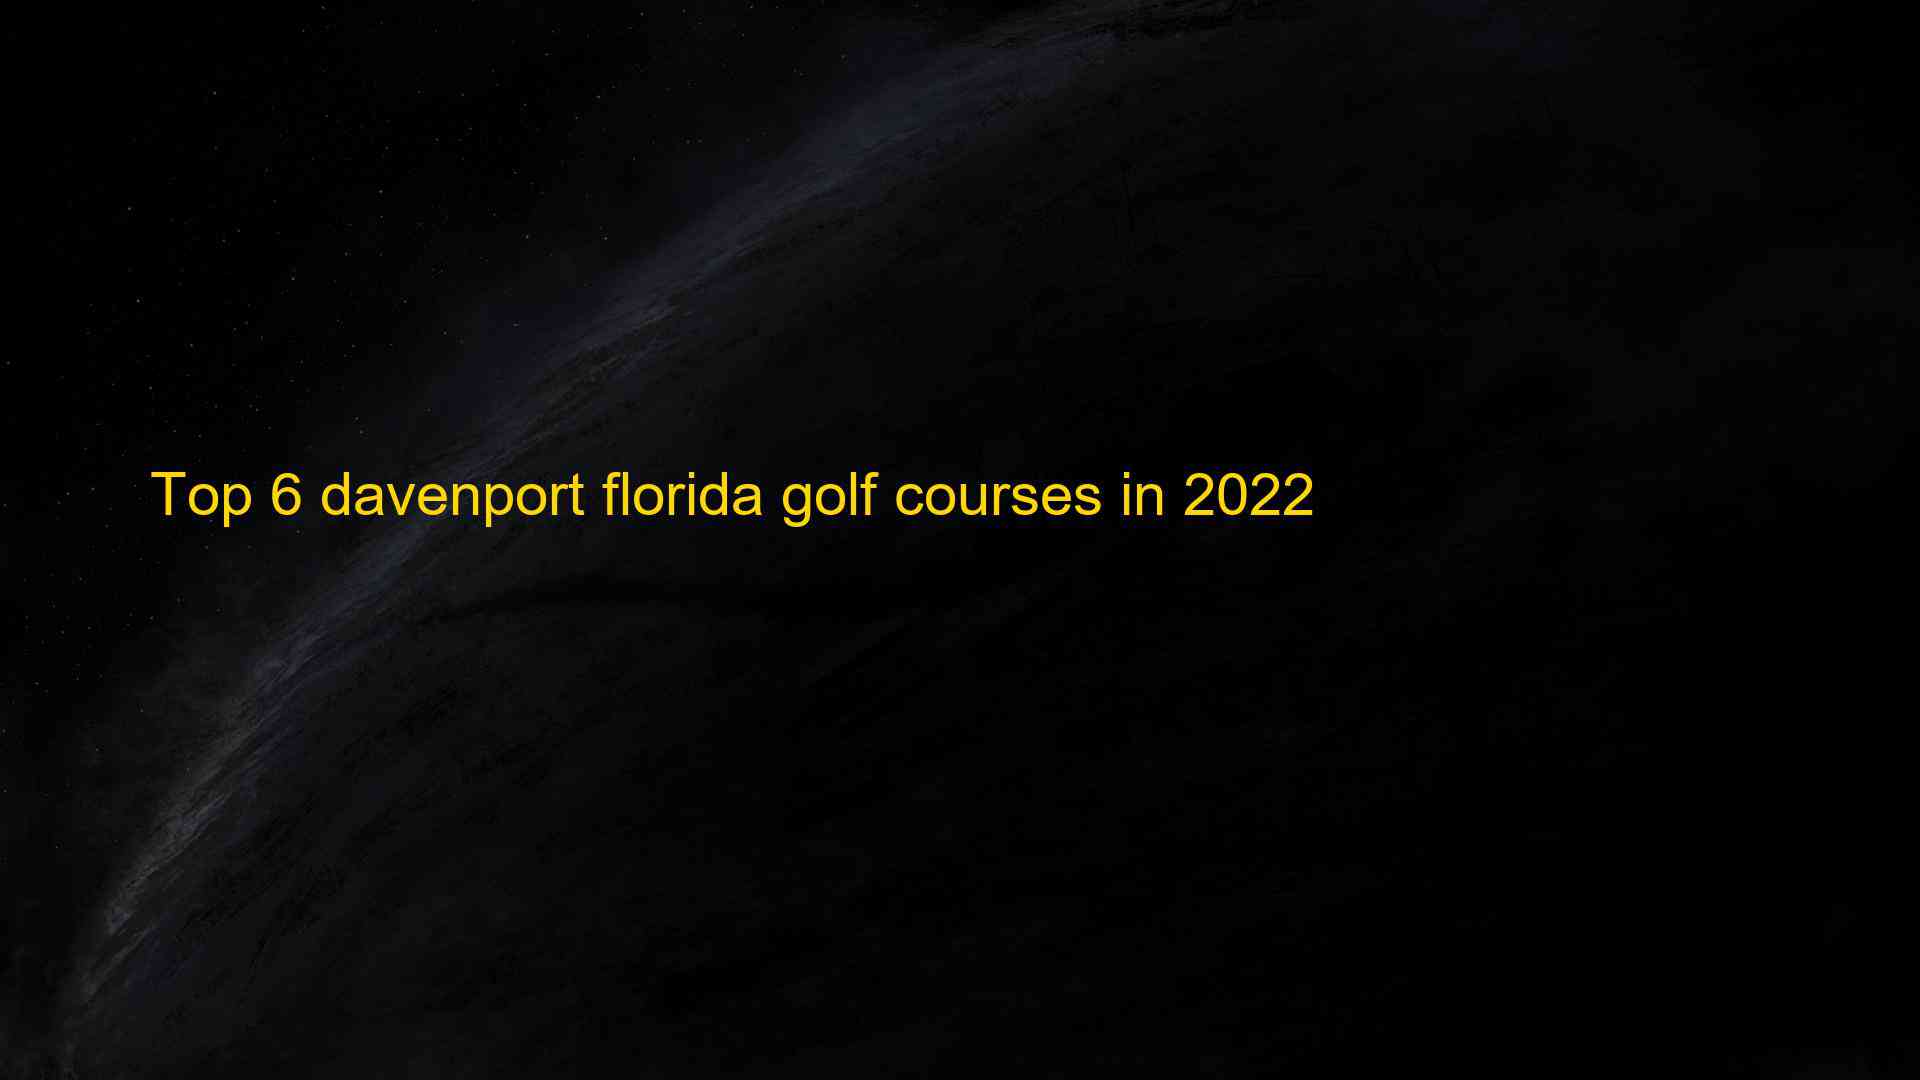 Top 6 davenport florida golf courses in 2022 1660908998